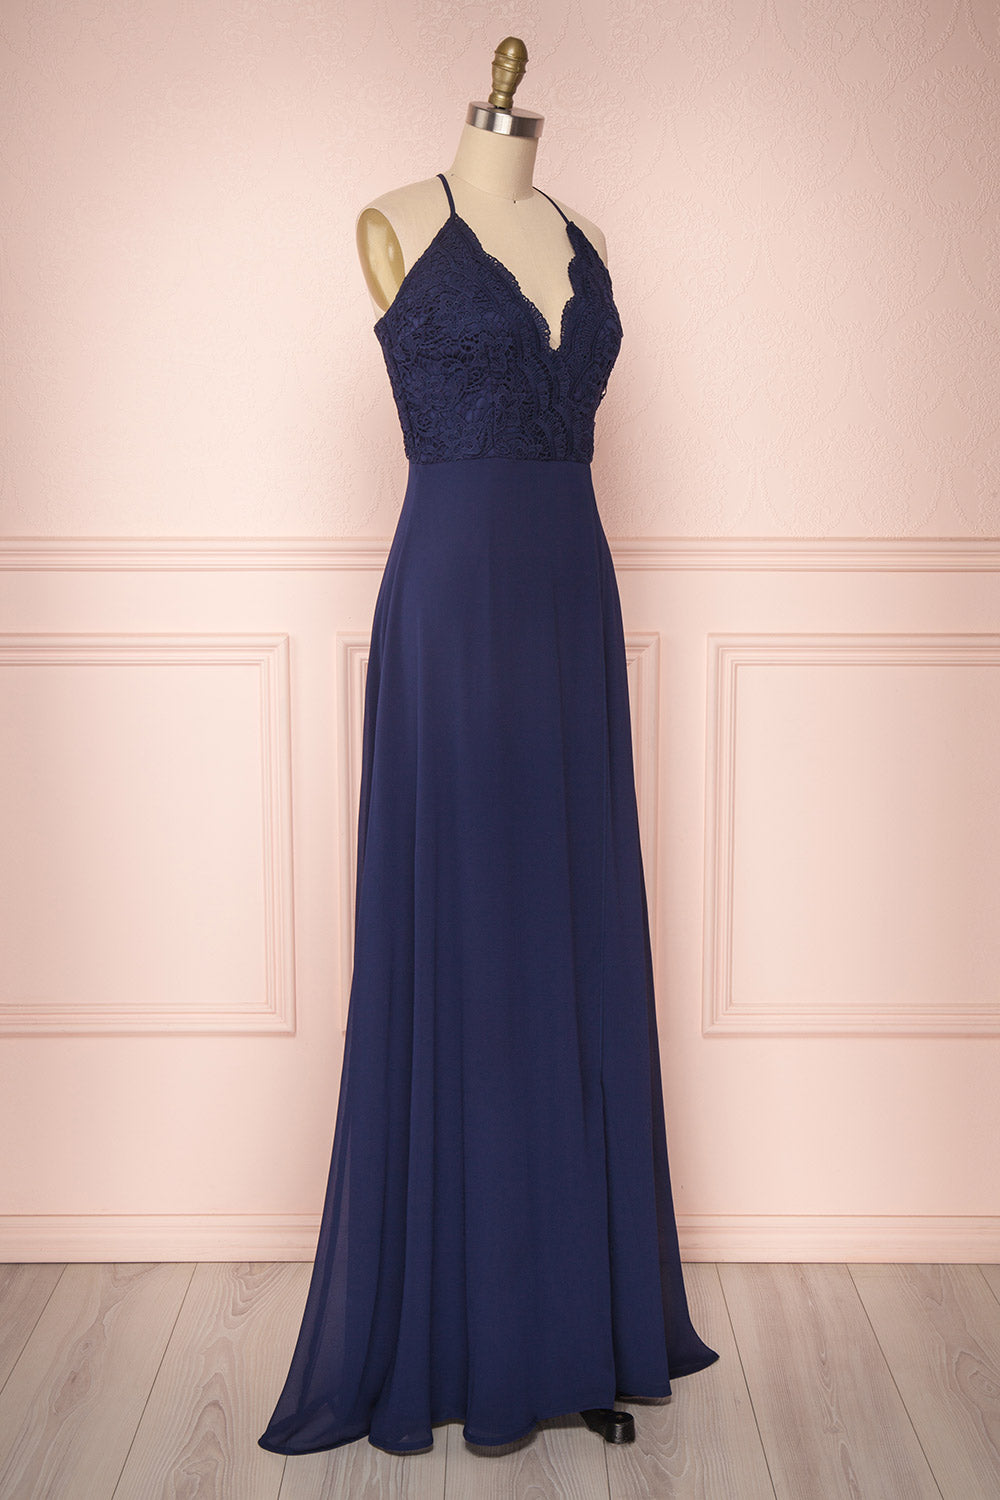 Fabia Navy Blue Lace & Chiffon Bridesmaid Dress | Boudoir 1861 side view